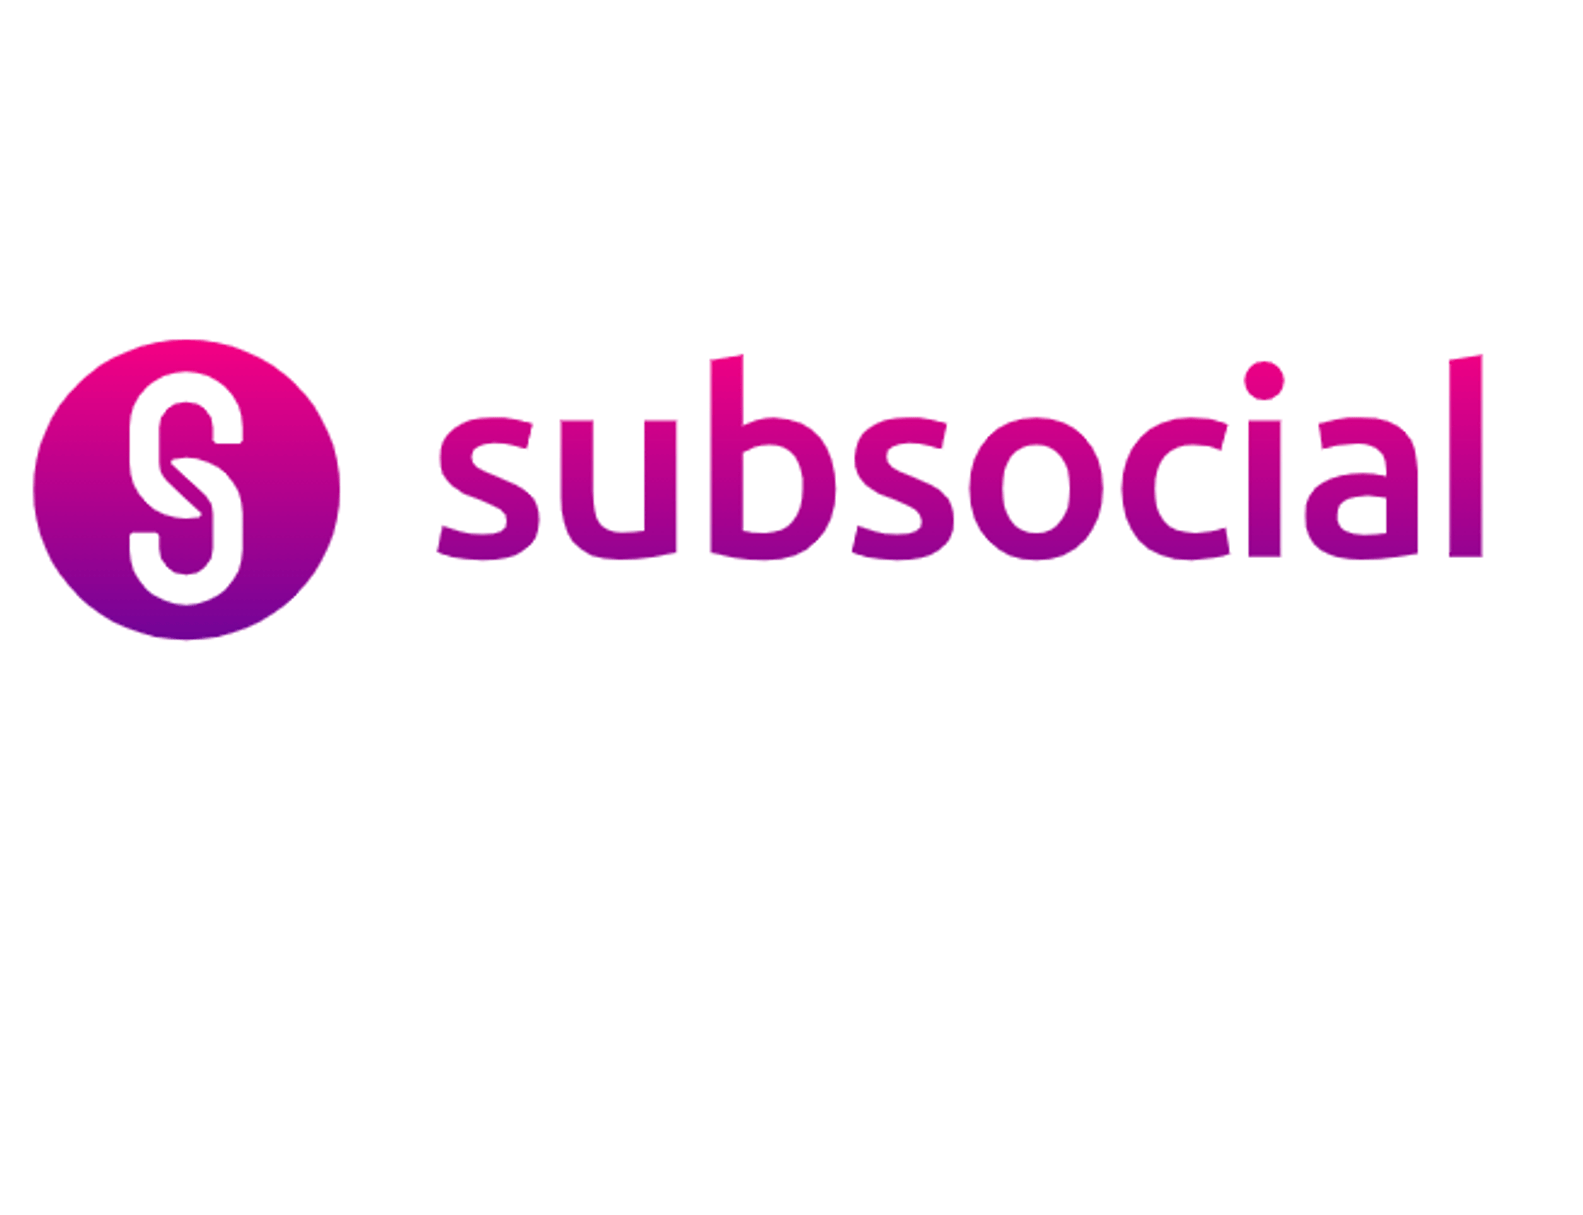 Subsocial